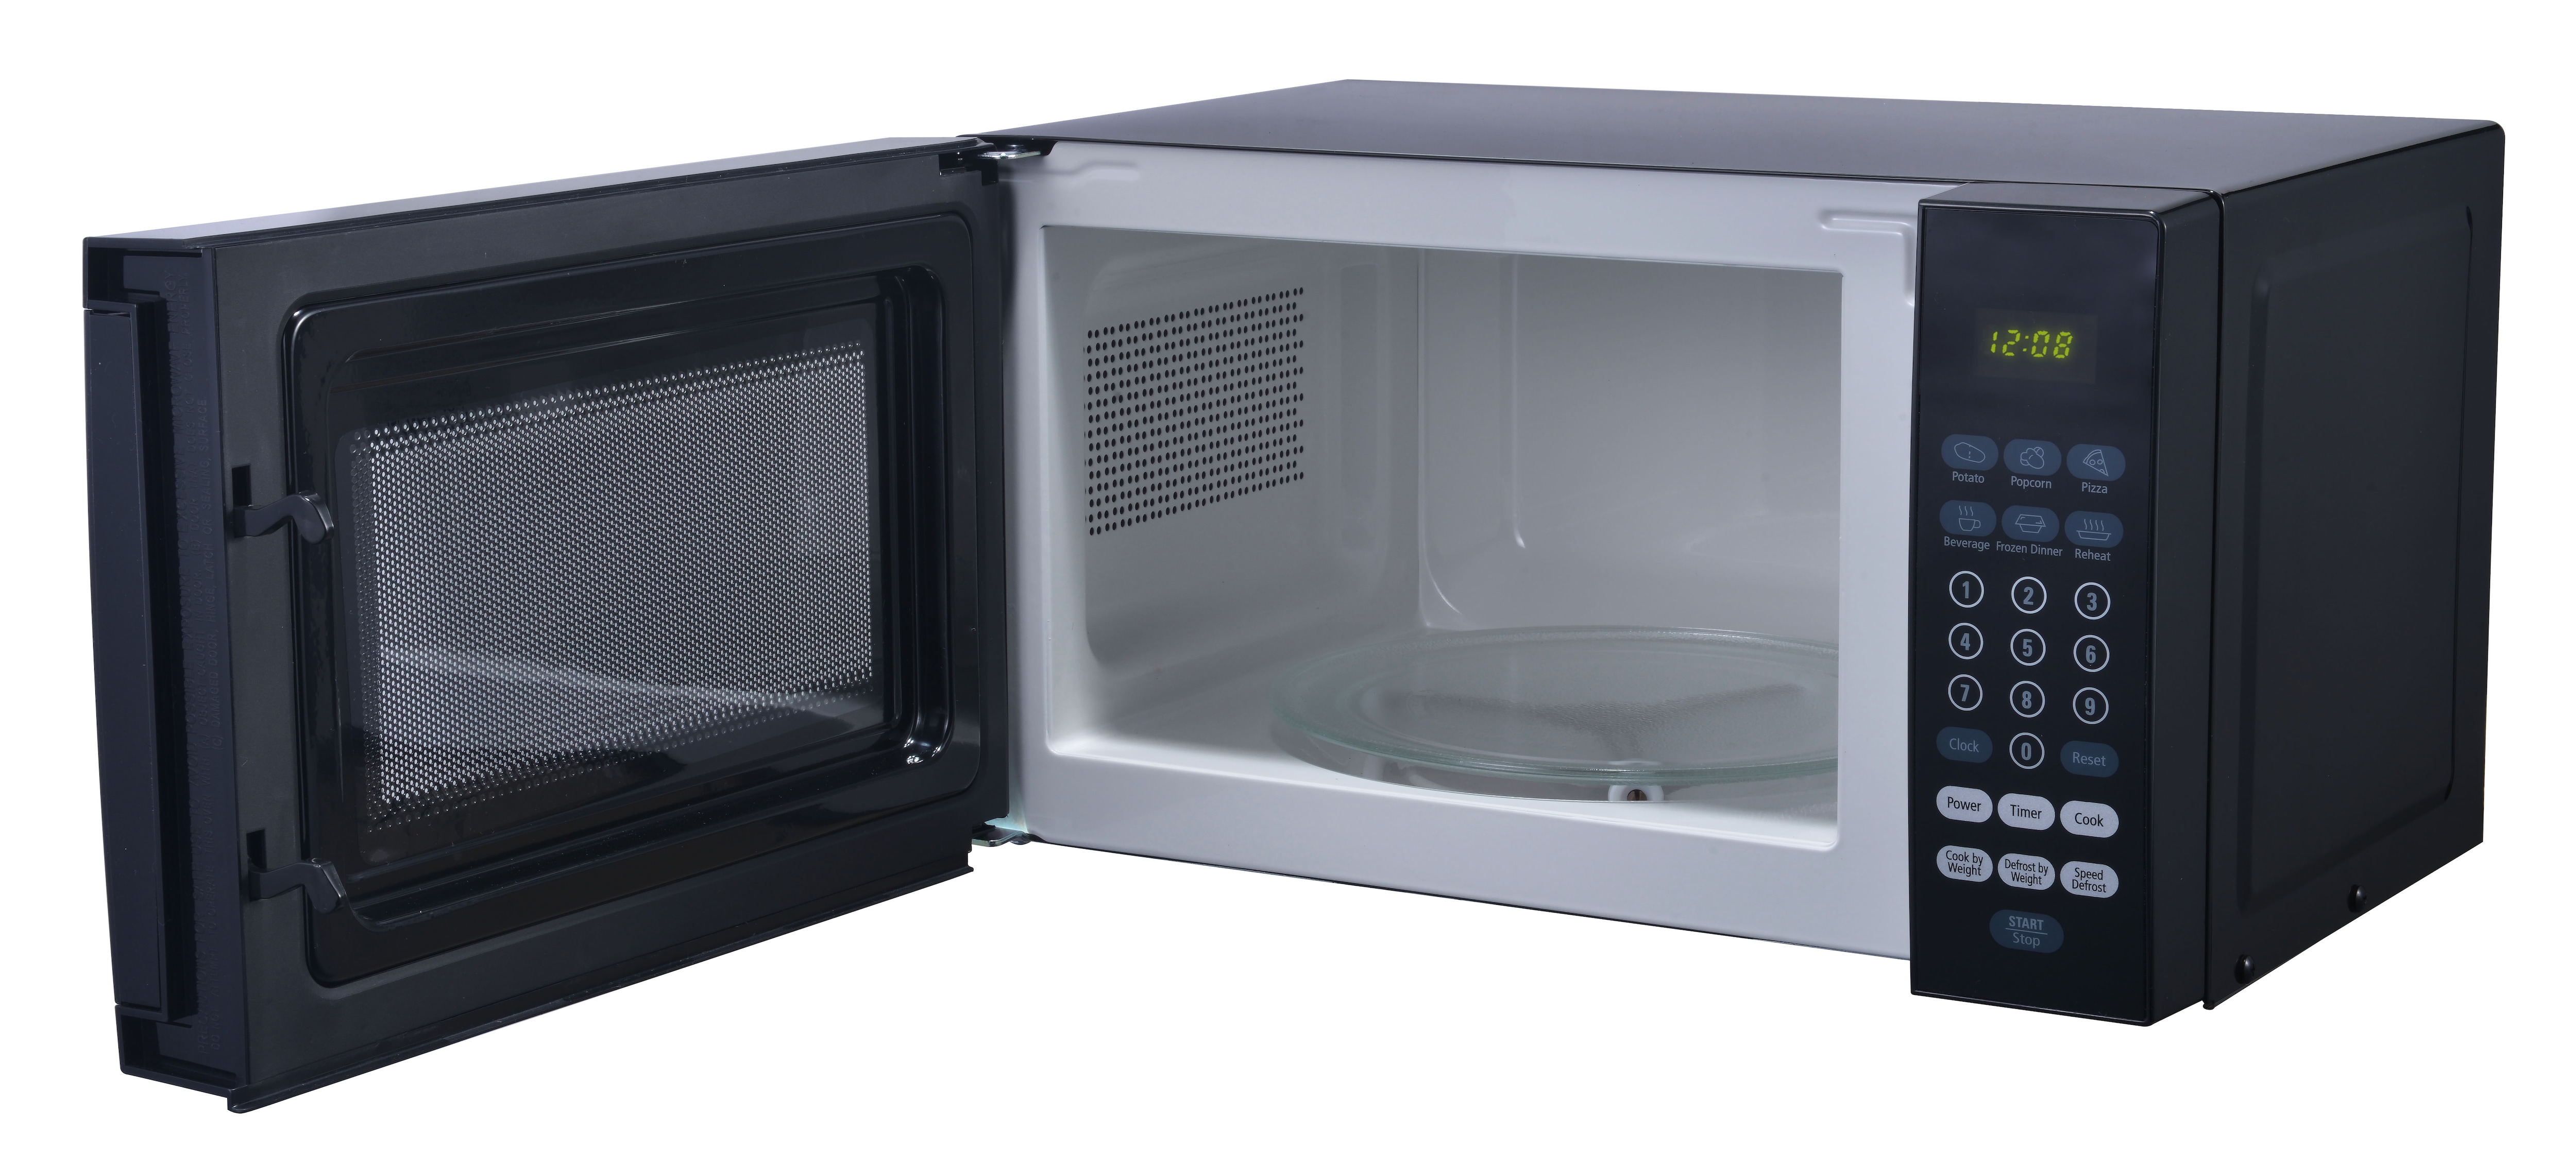 Best Buy: Sunbeam 0.7 Cu. Ft. Compact Microwave White SGS90701W-B